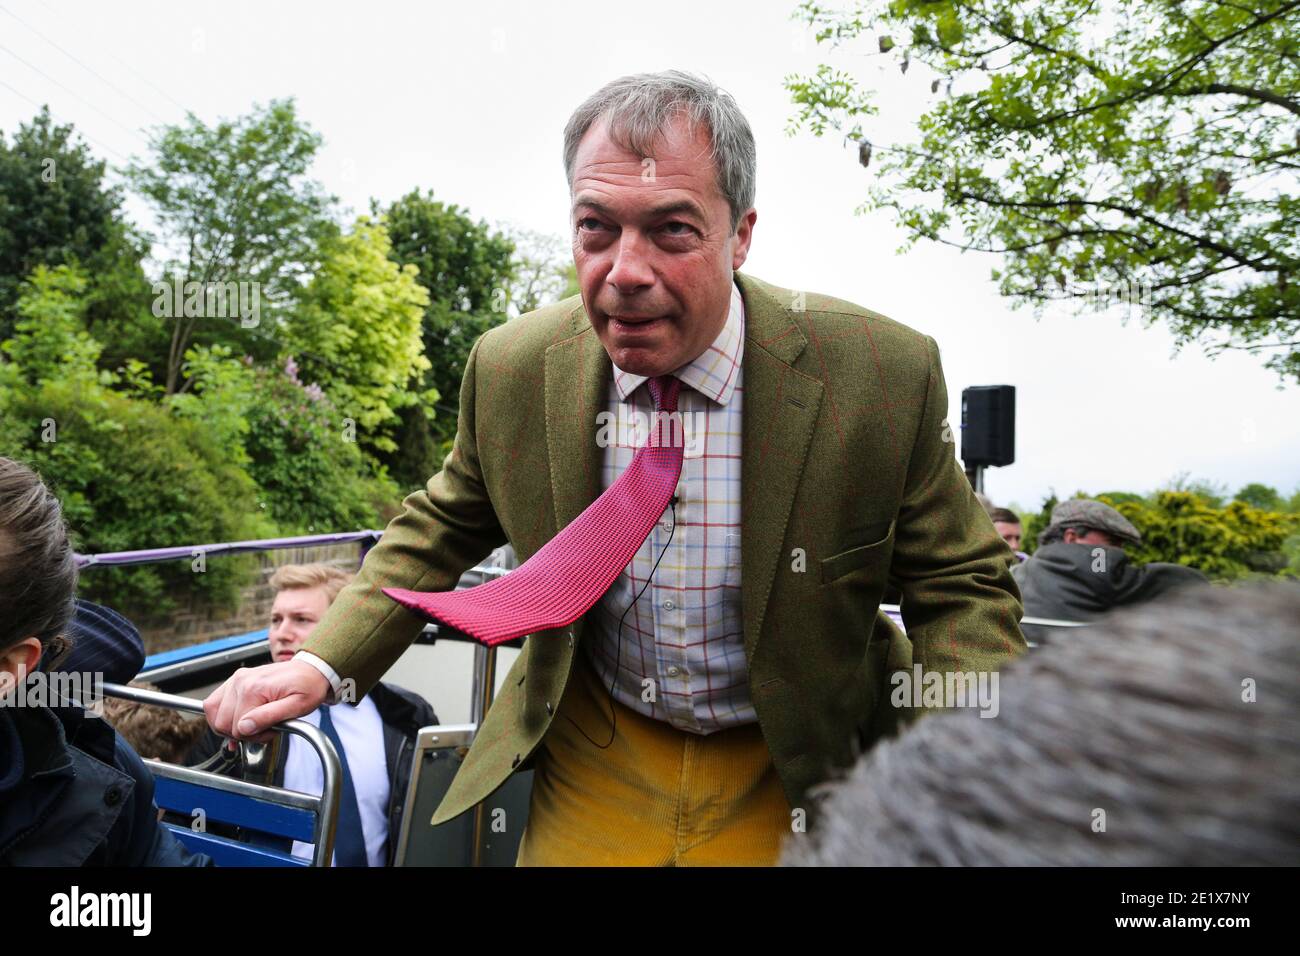 25/05/16. Stocksbridge, UK. Nigel Farage ducks to avoid overhanging trees as he rides atop the UKIP Referendum bus in Stocksbridge, South Yorkshire, i Stock Photo